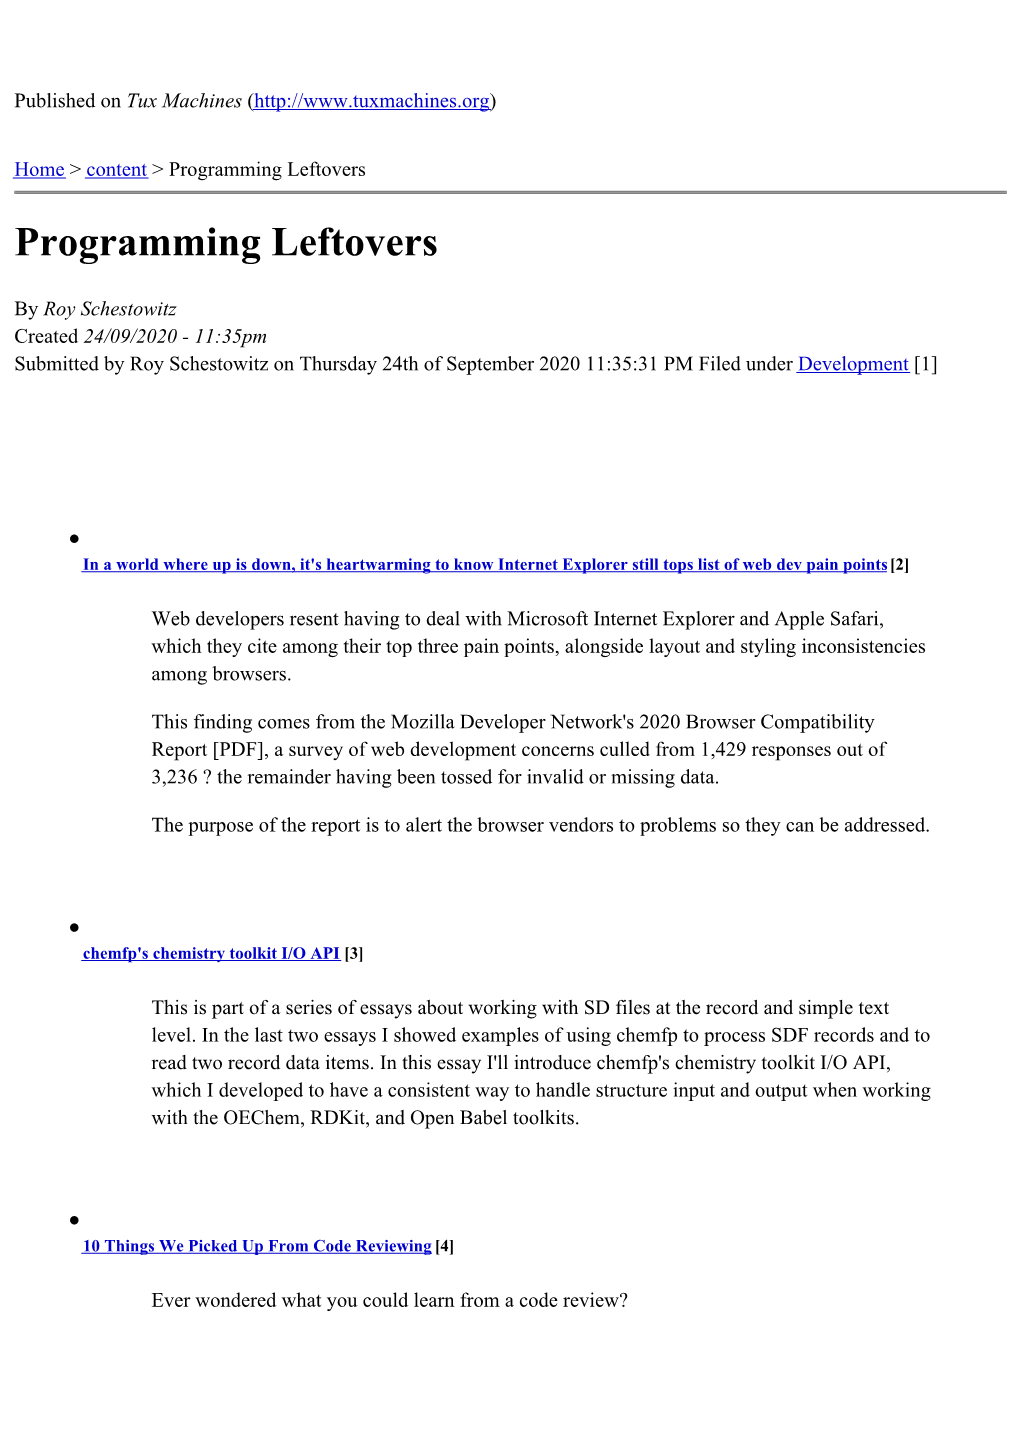 Programming Leftovers